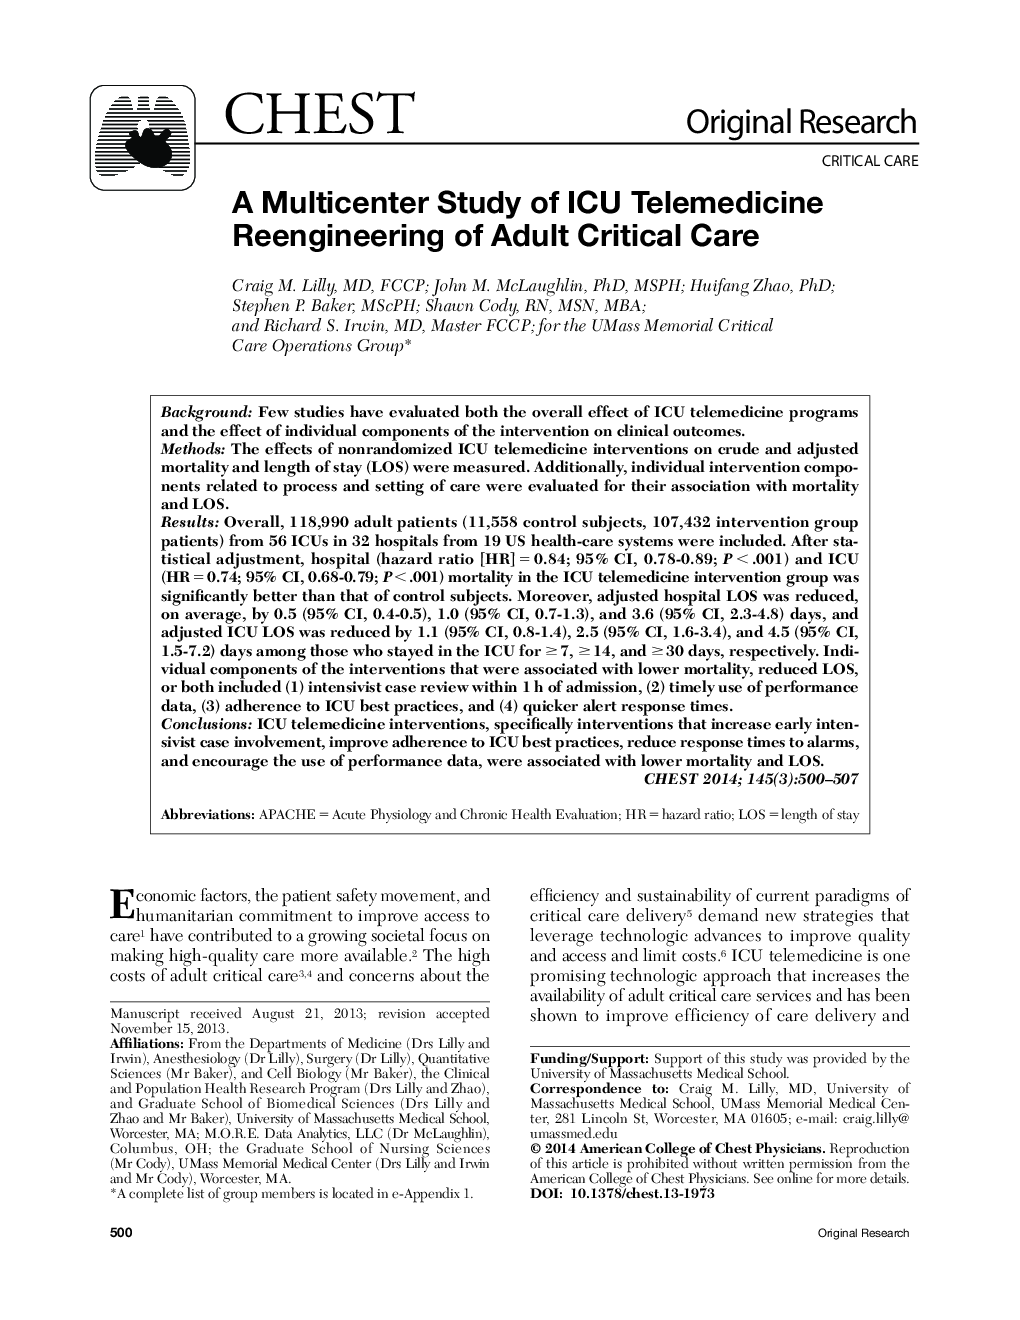 A Multicenter Study of ICU Telemedicine Reengineering of Adult Critical Care 